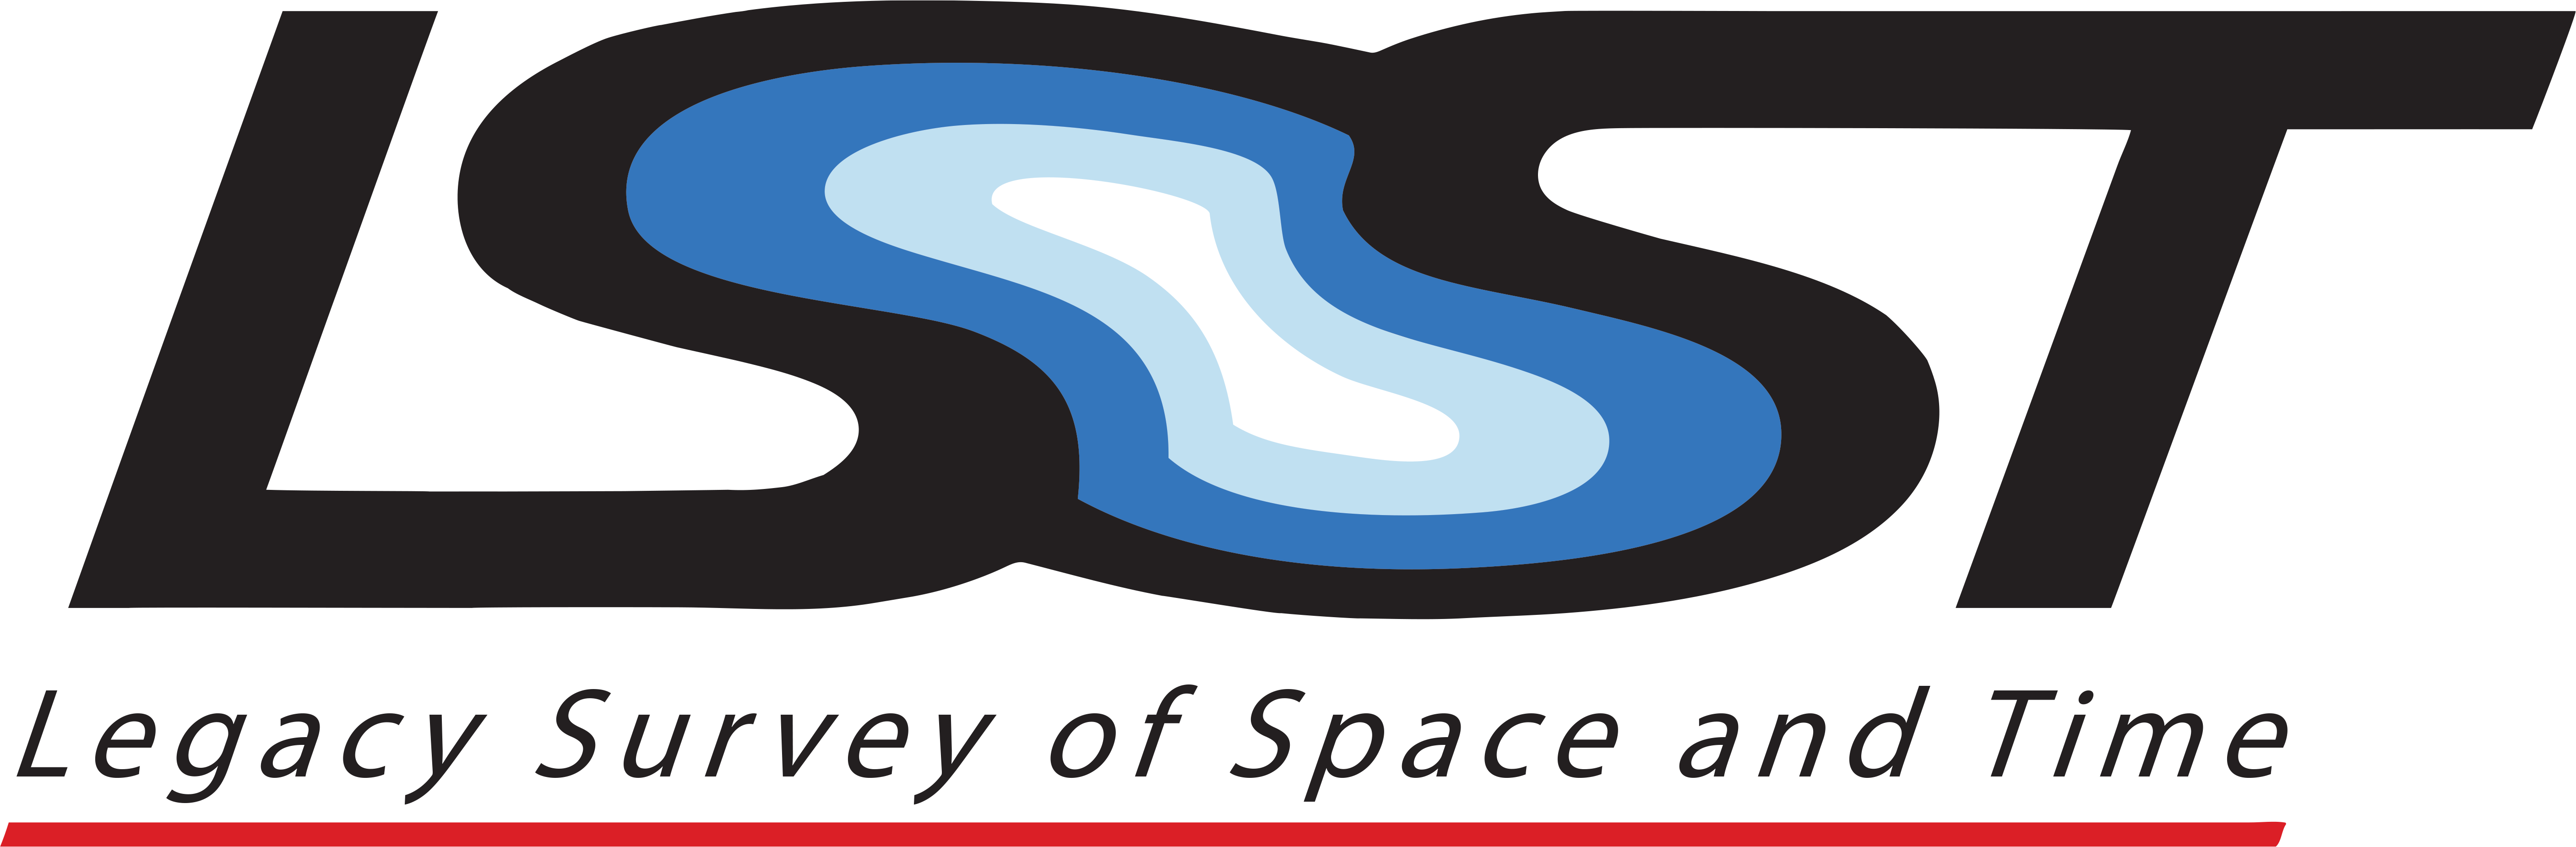 Legacy-Survey-Space-Time_logo-1.png